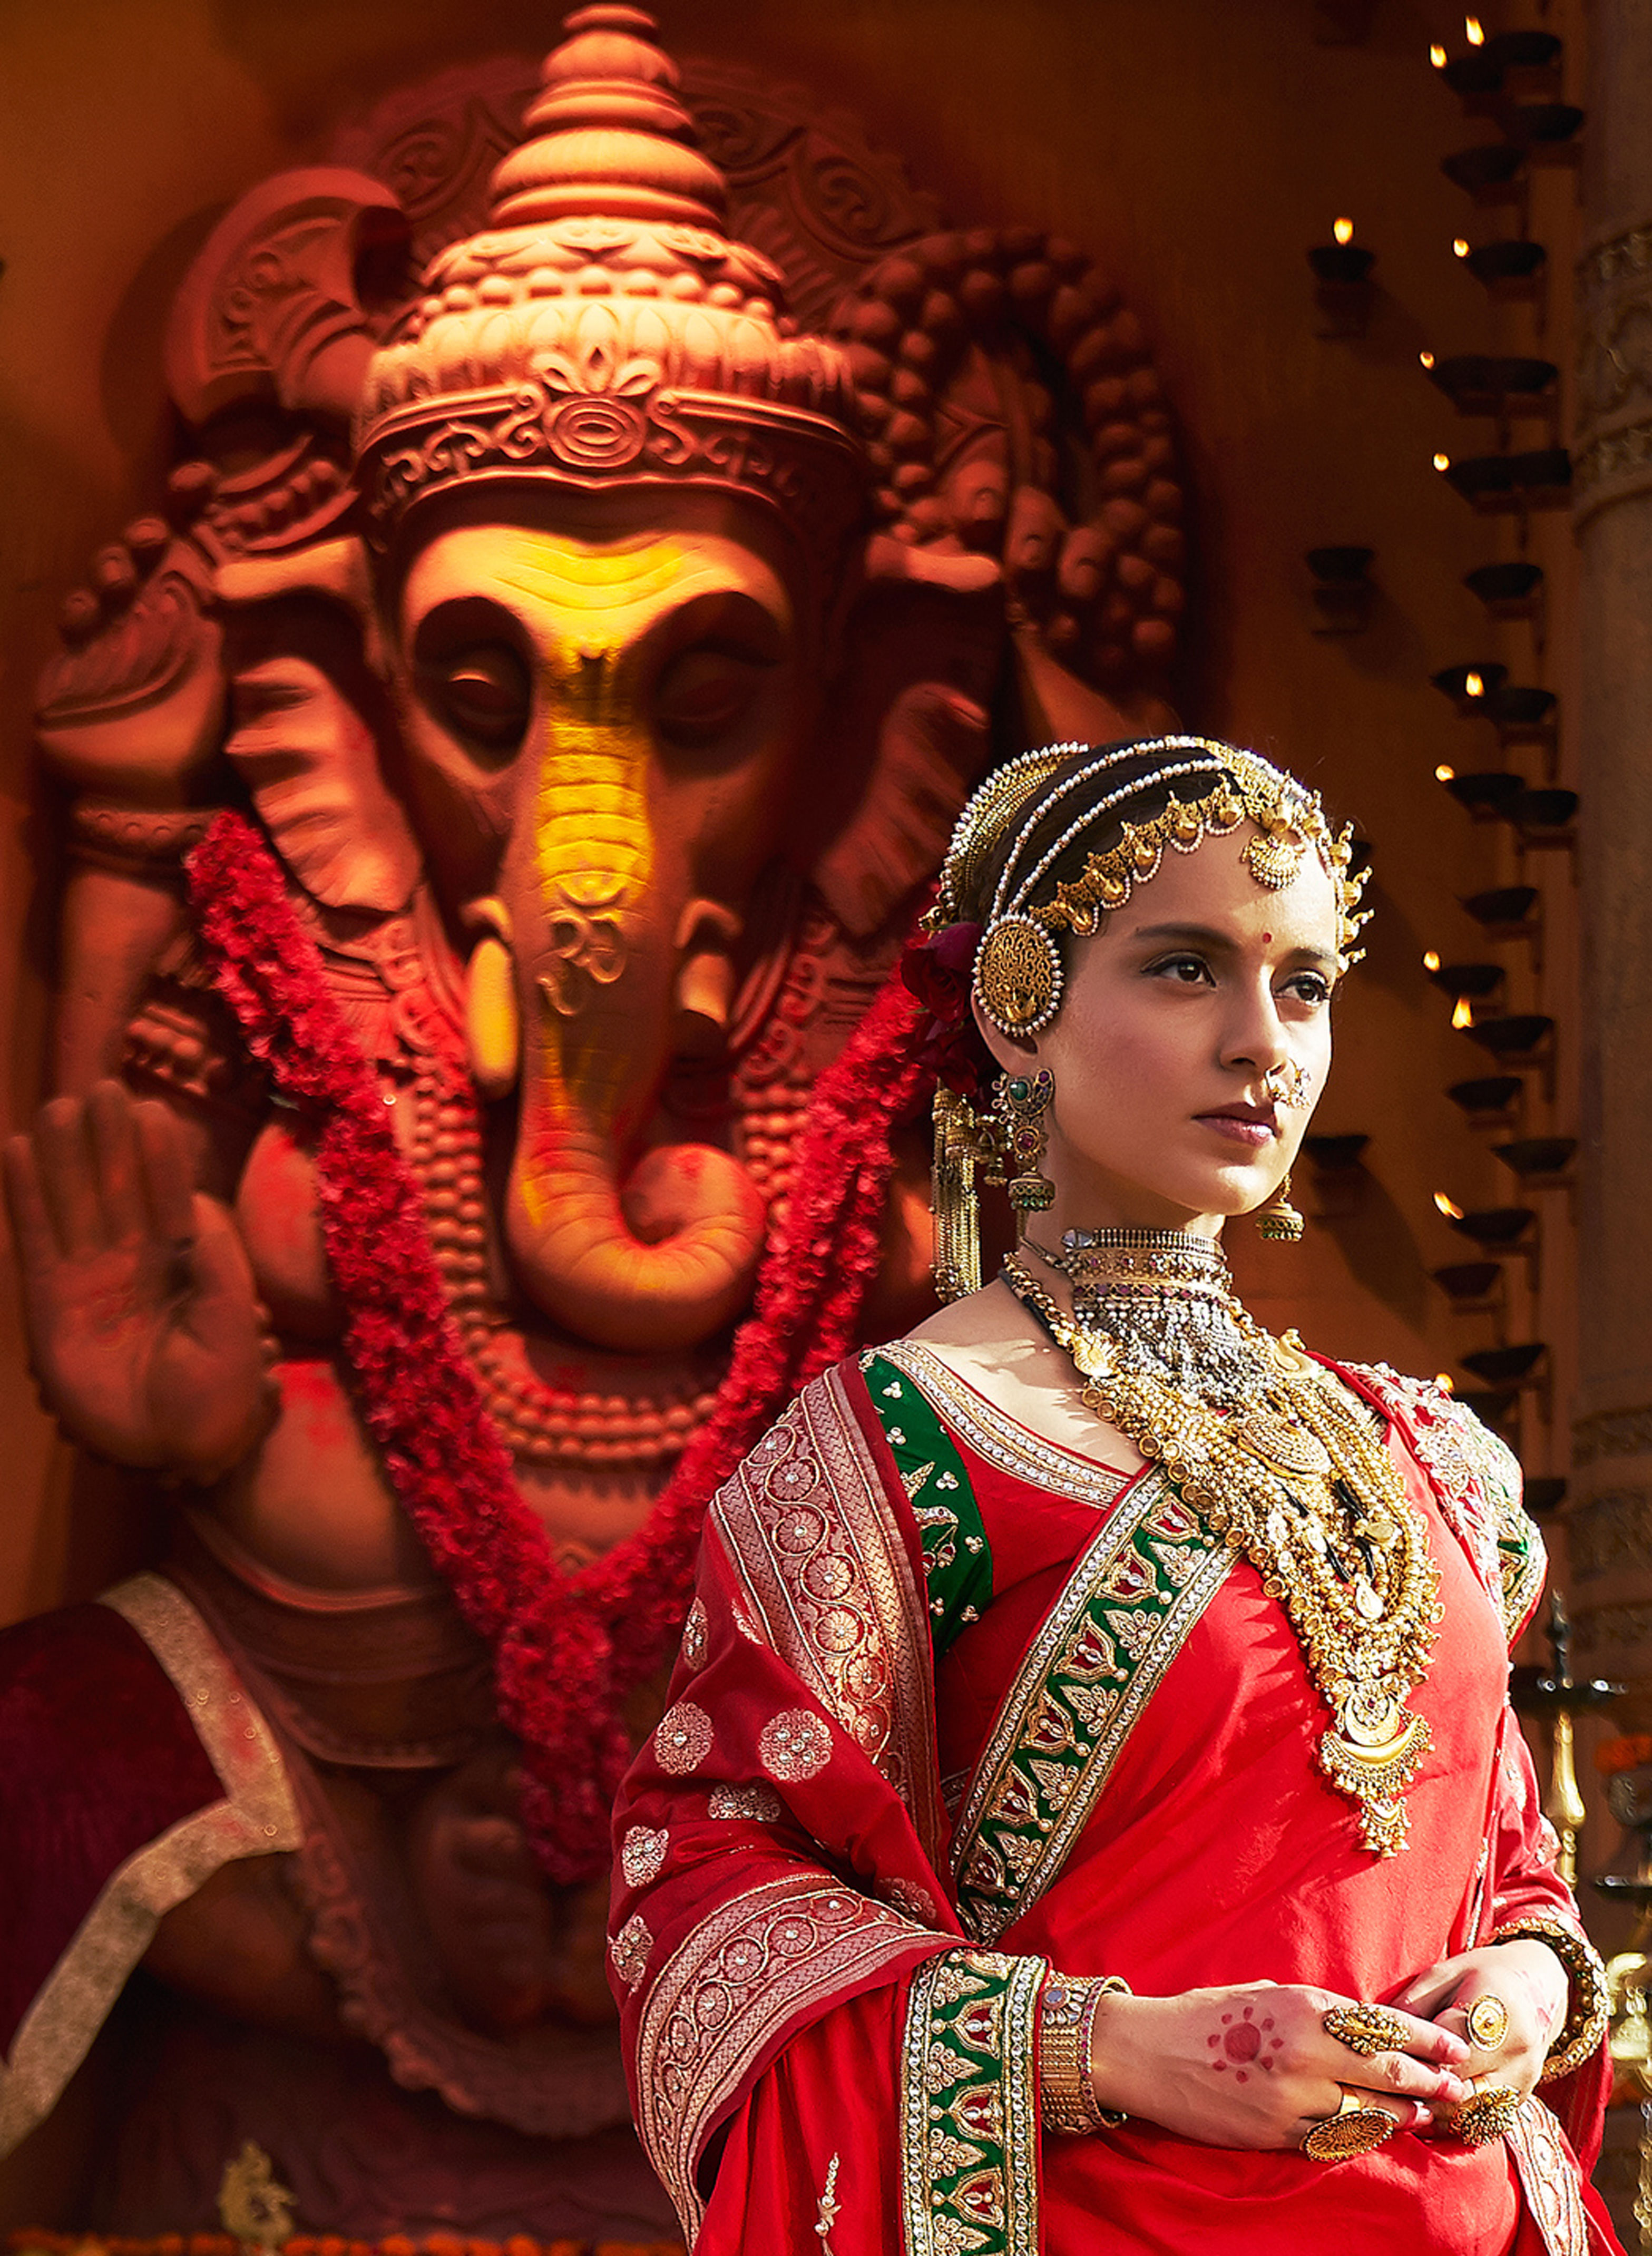 Celebrity Kangana Ranaut in Amrapali Jewellery for the movie - Manikarnika.